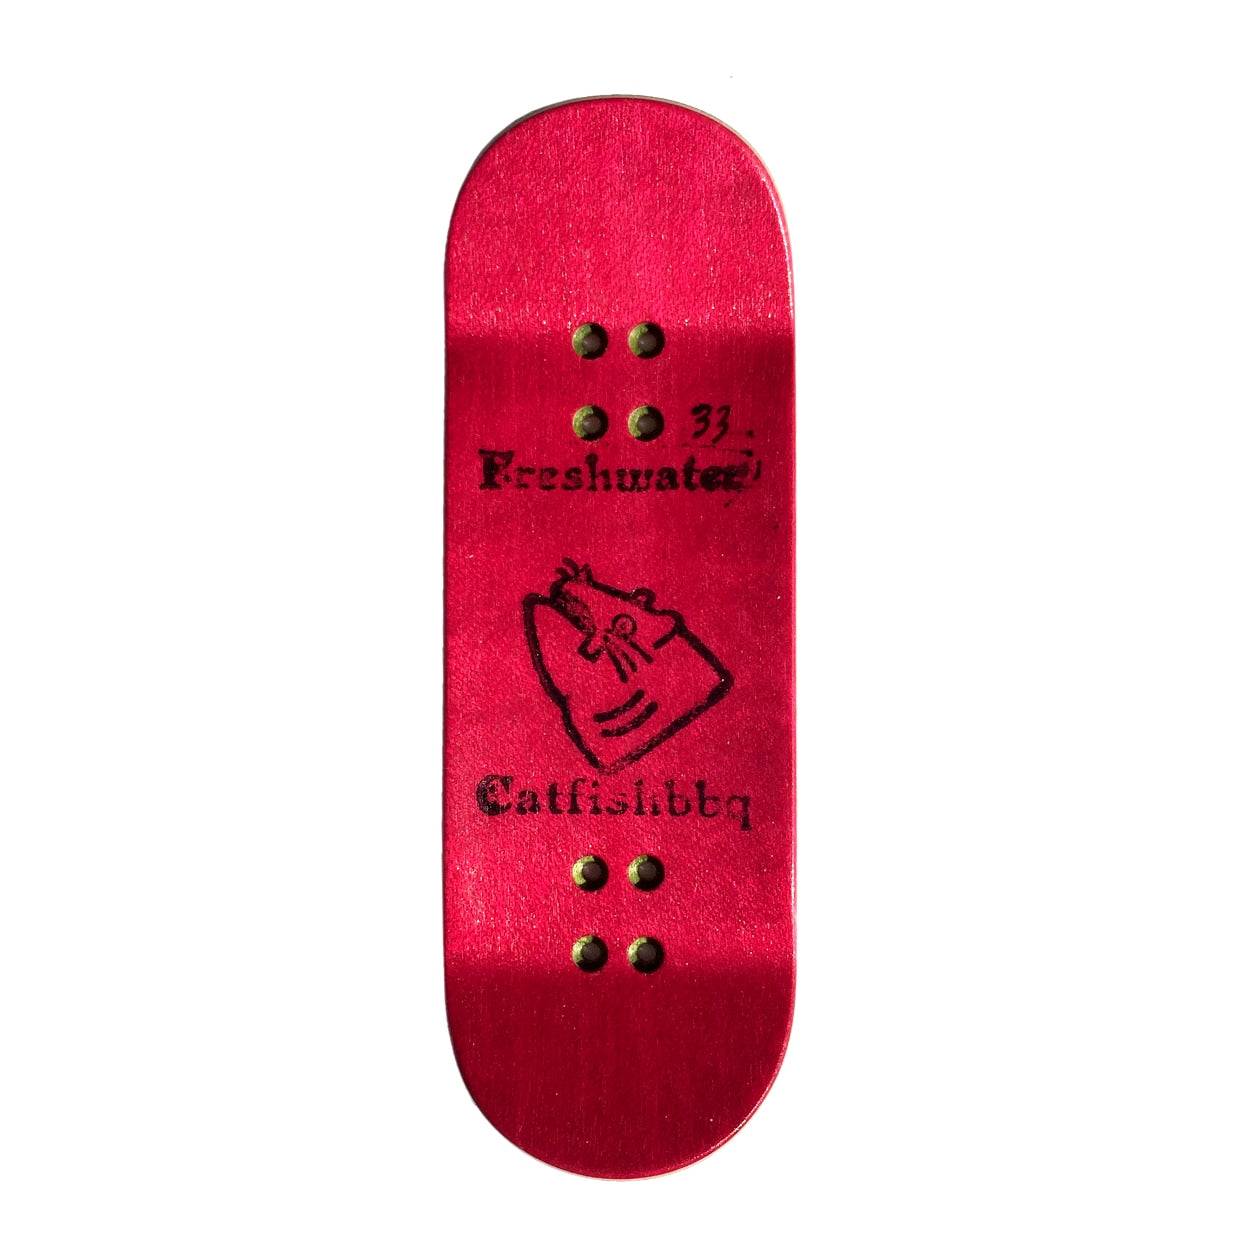 Catfishbbq Blood Dragon Boxhead Fingerboard Deck - Natural